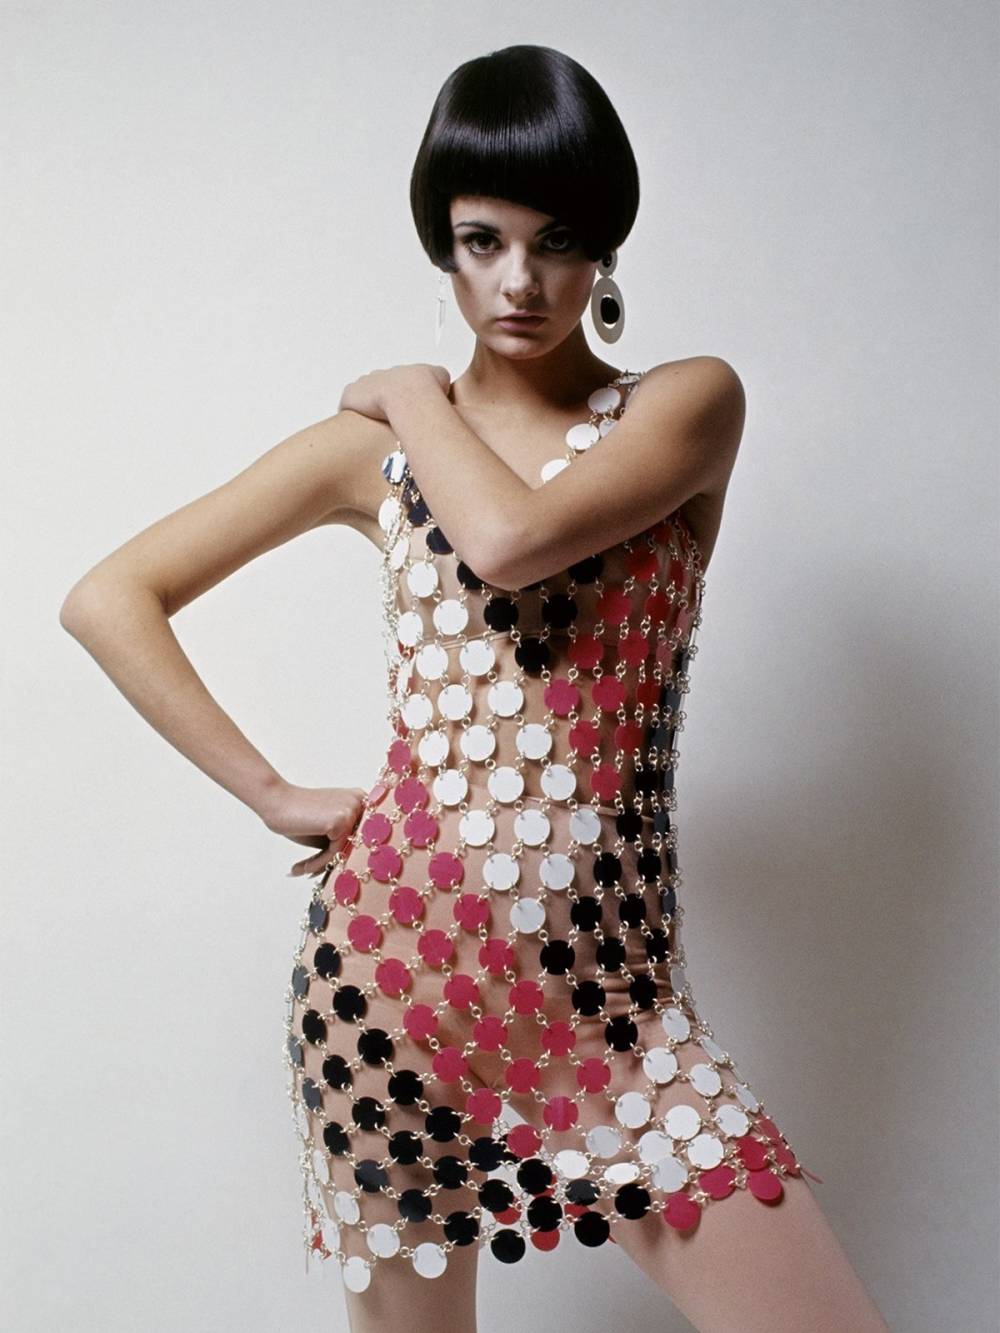  Paco Rabbane , Metal Disk Dress, 1966 